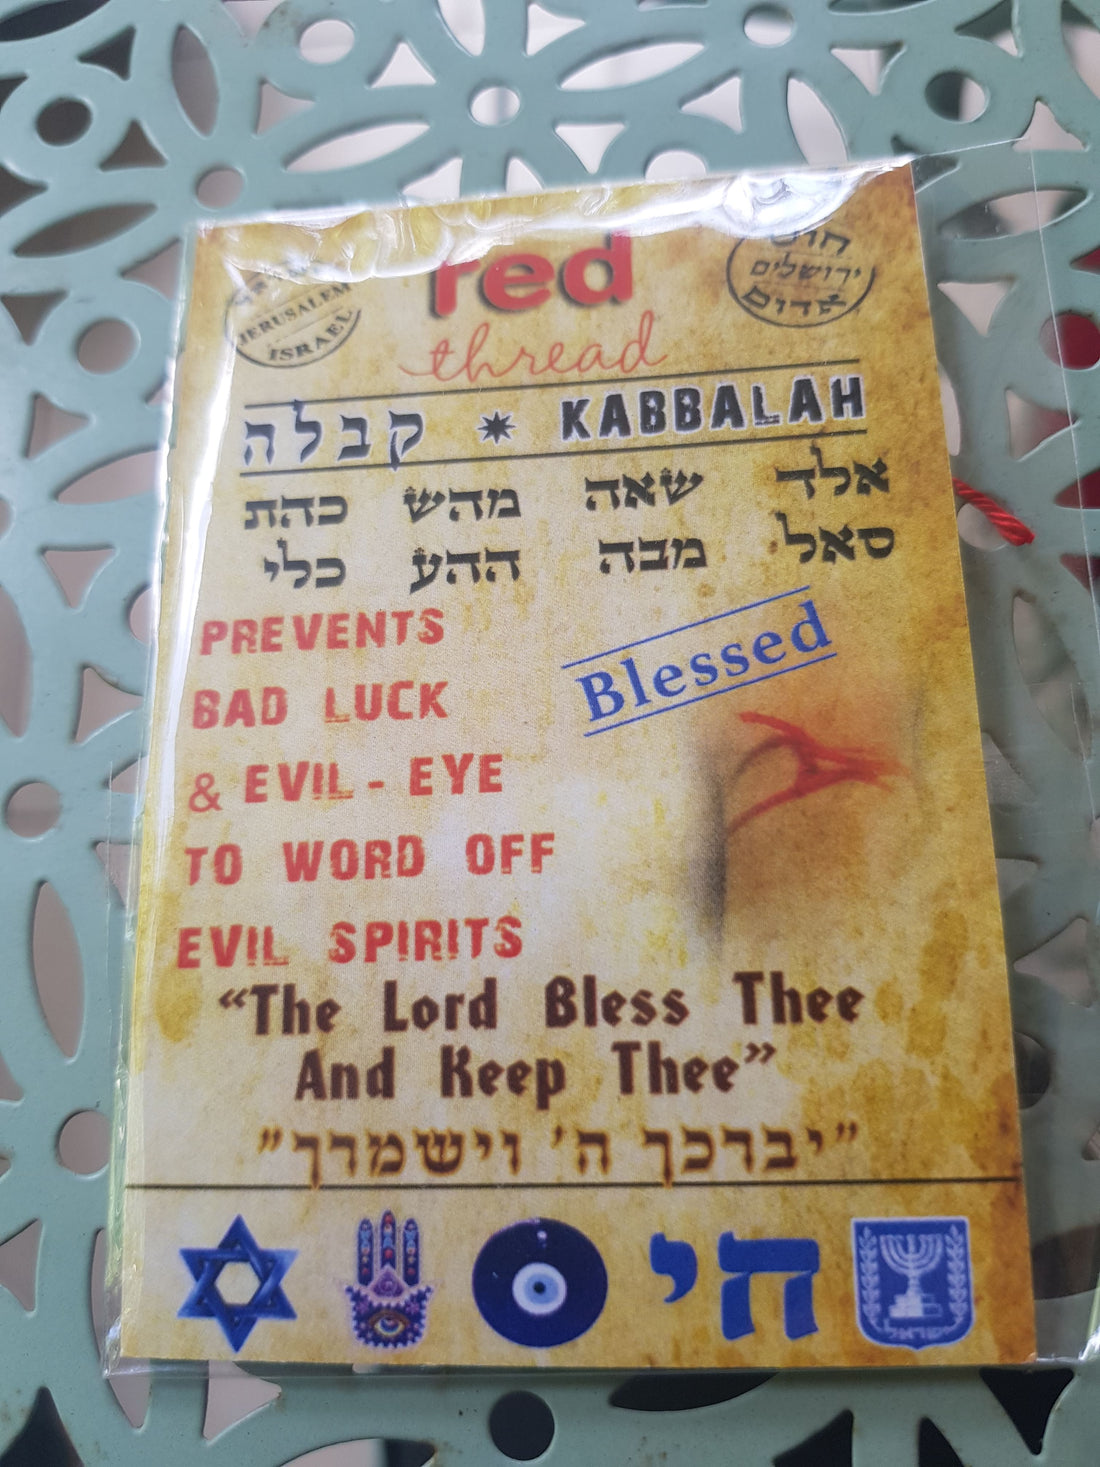 The red Kabbalah bracelet